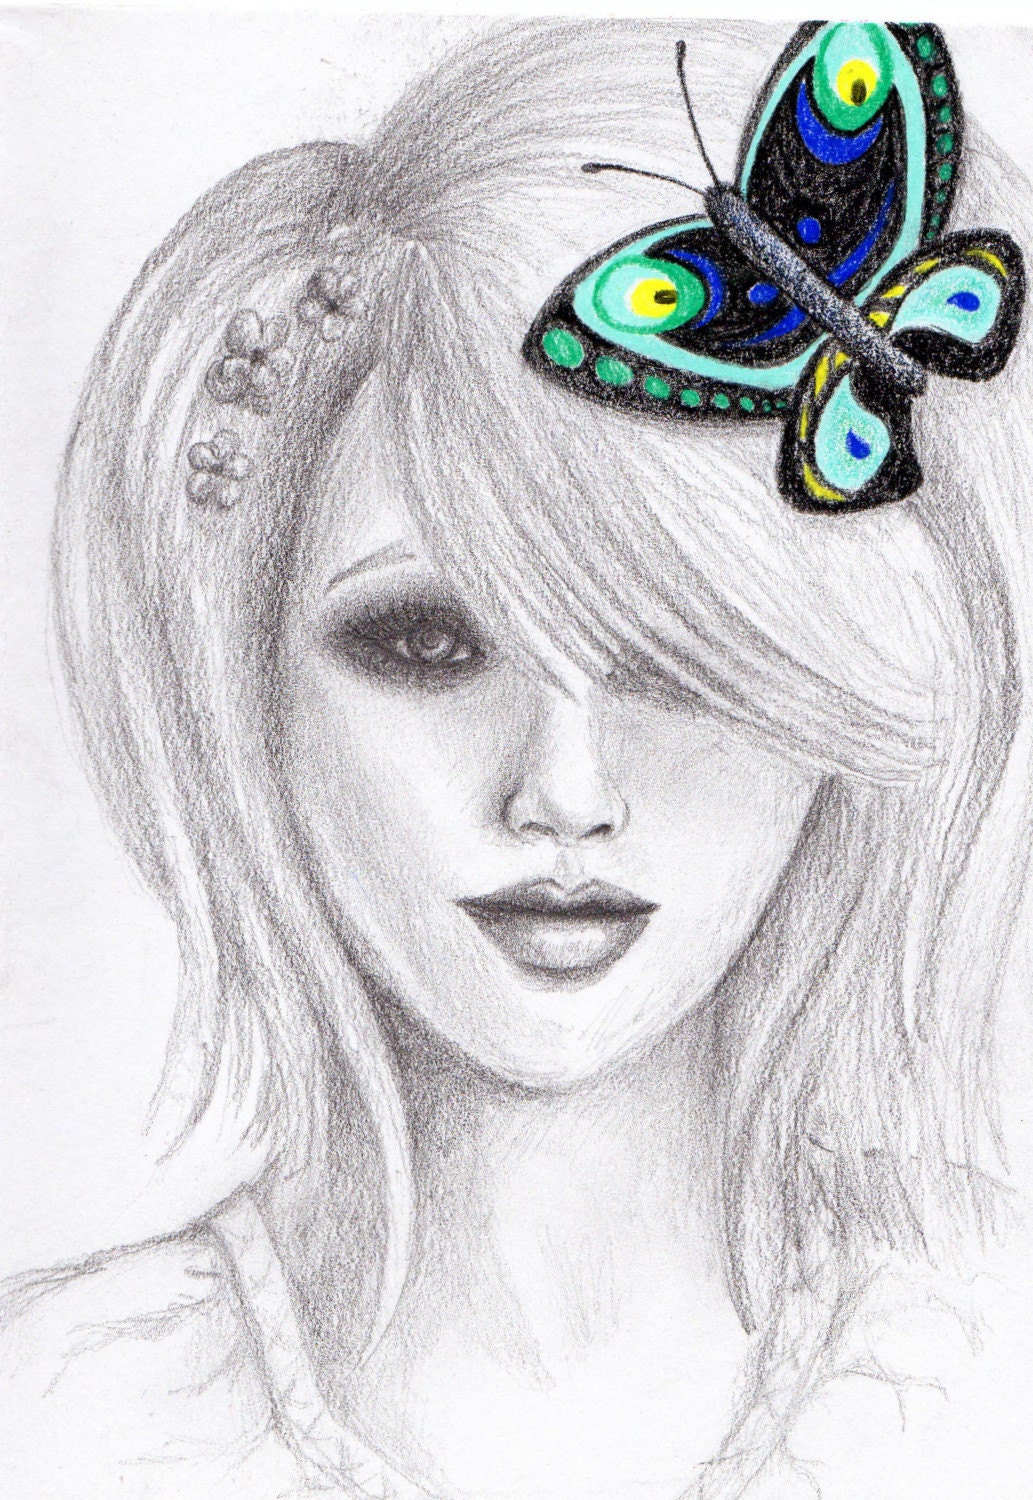 Butterflies Drawings In Pencil